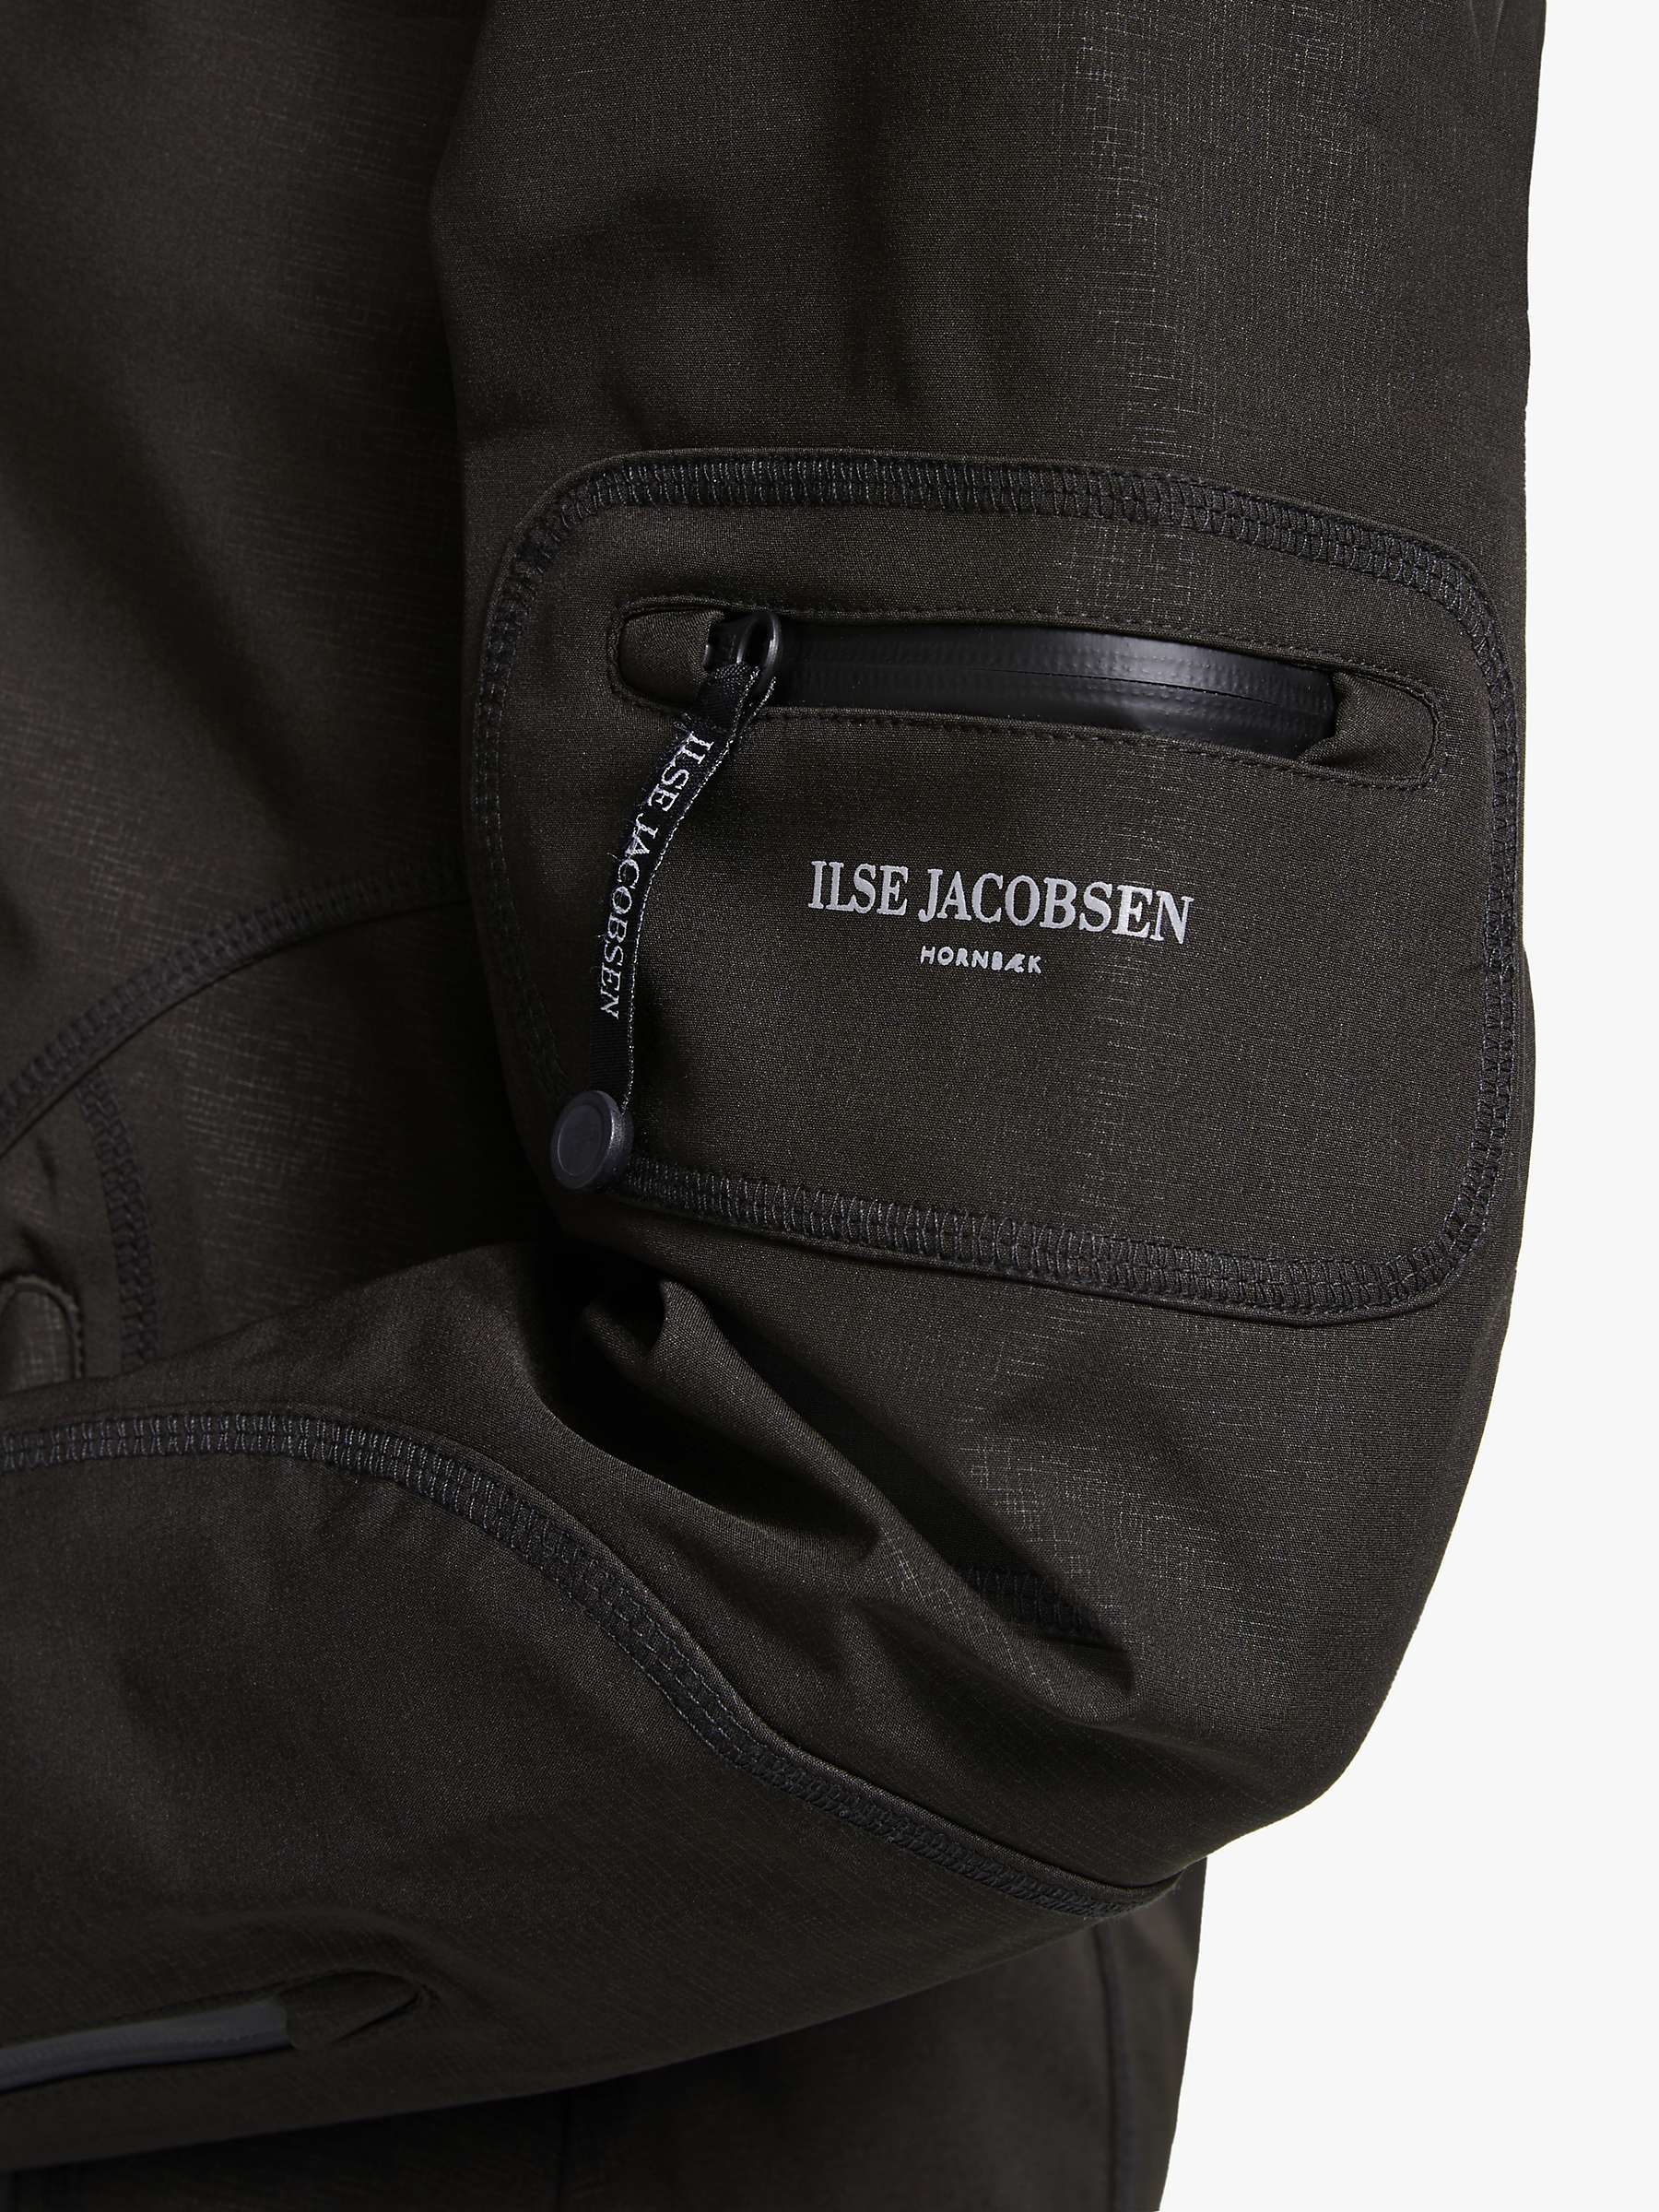 Buy Ilse Jacobsen Hornbæk 3/4 Length Raincoat, Black Online at johnlewis.com